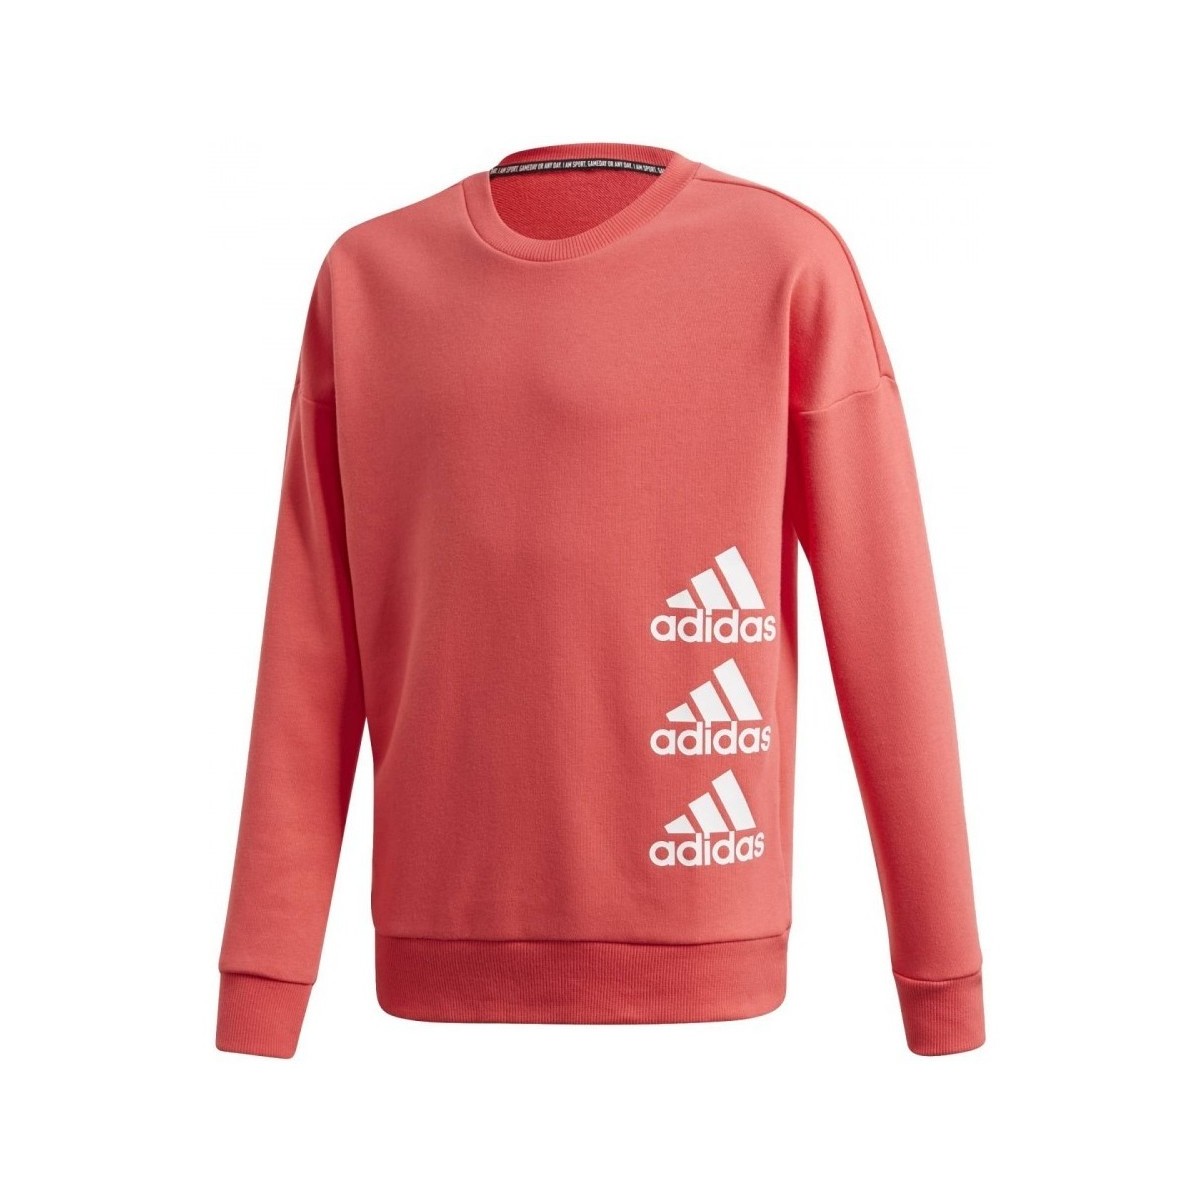 Textiel Meisjes Sweaters / Sweatshirts adidas Originals Jg Mh Crew Roze